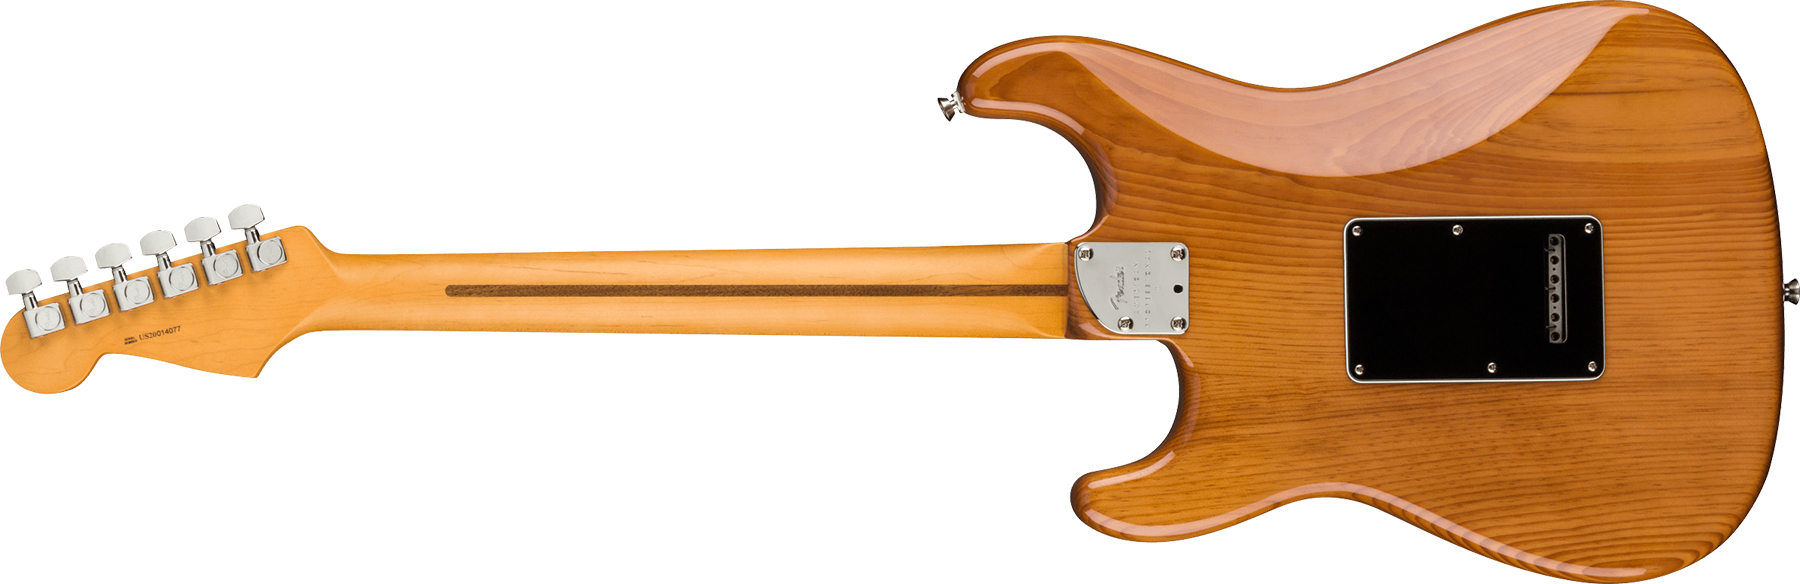 Fender Strat American Professional Ii Usa Rw - Roasted Pine - Str shape electric guitar - Variation 1